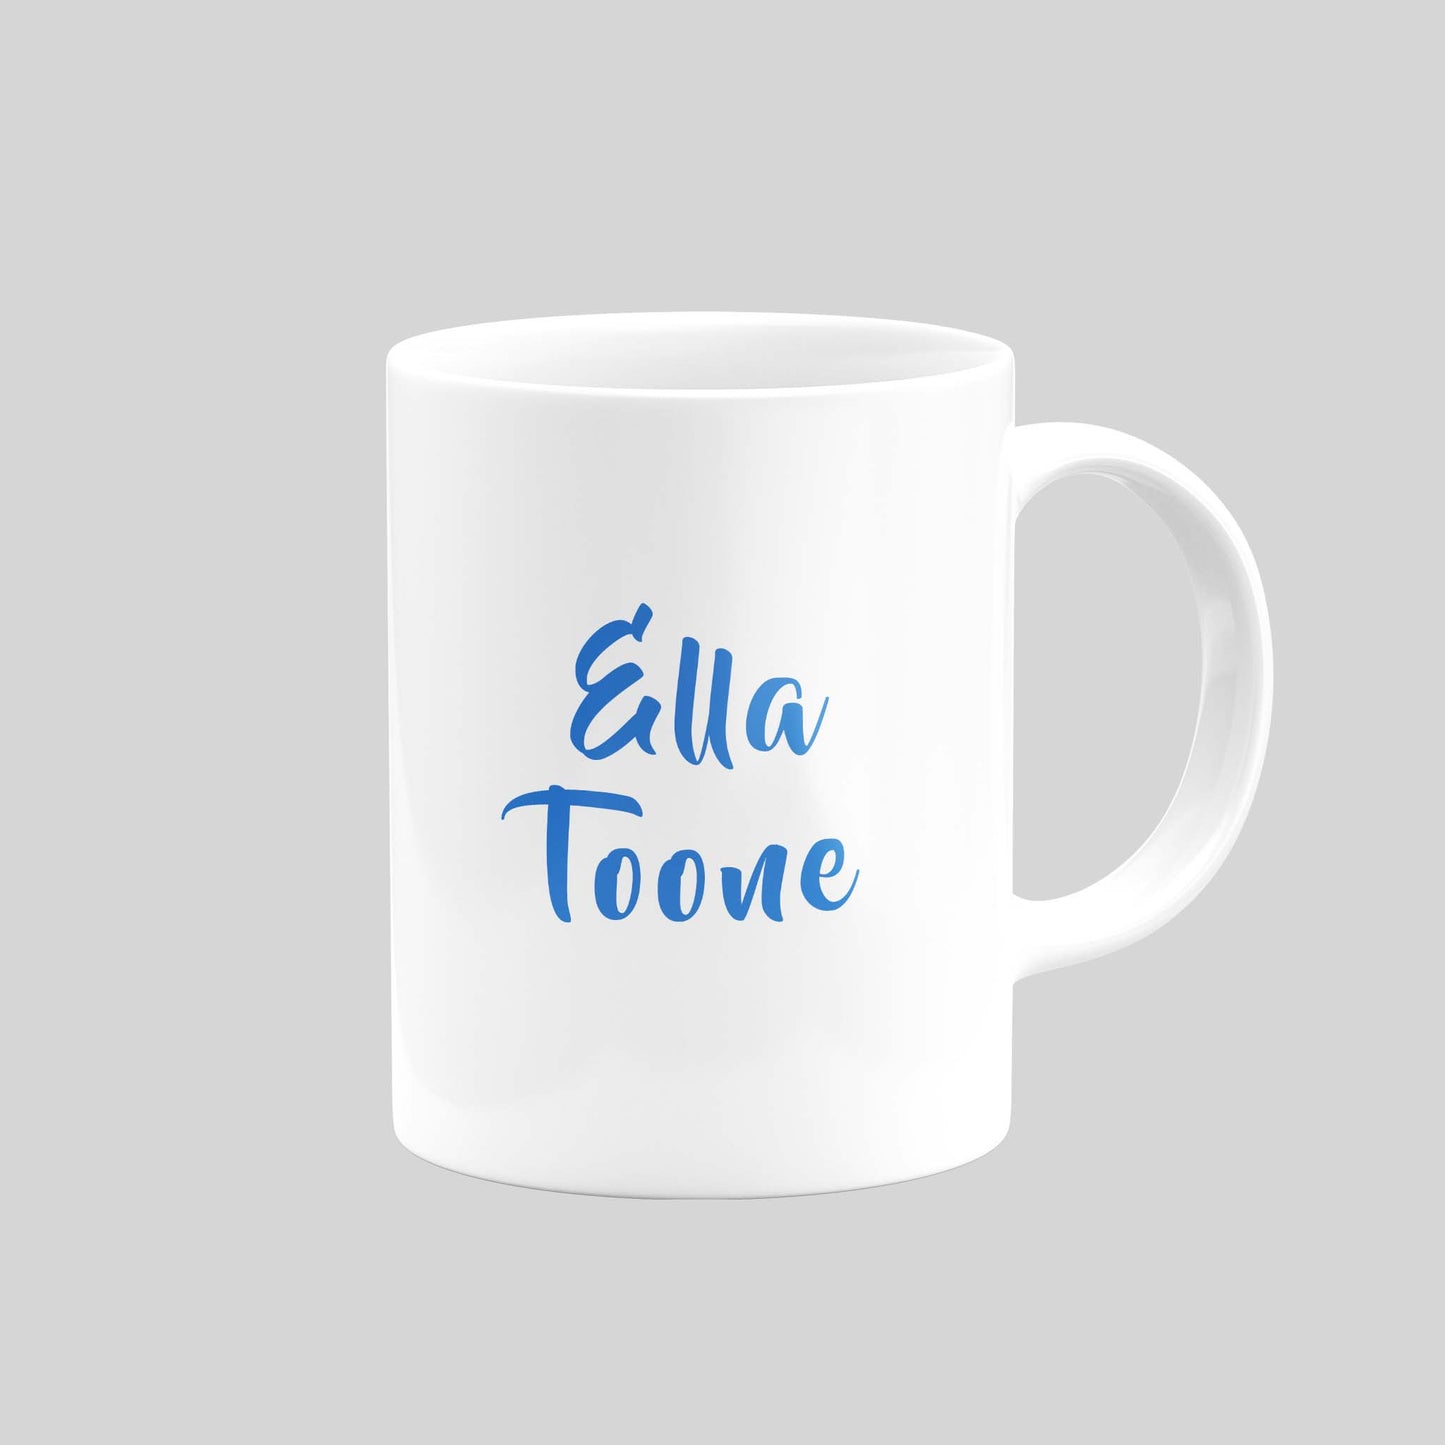 Ella Toone Mug